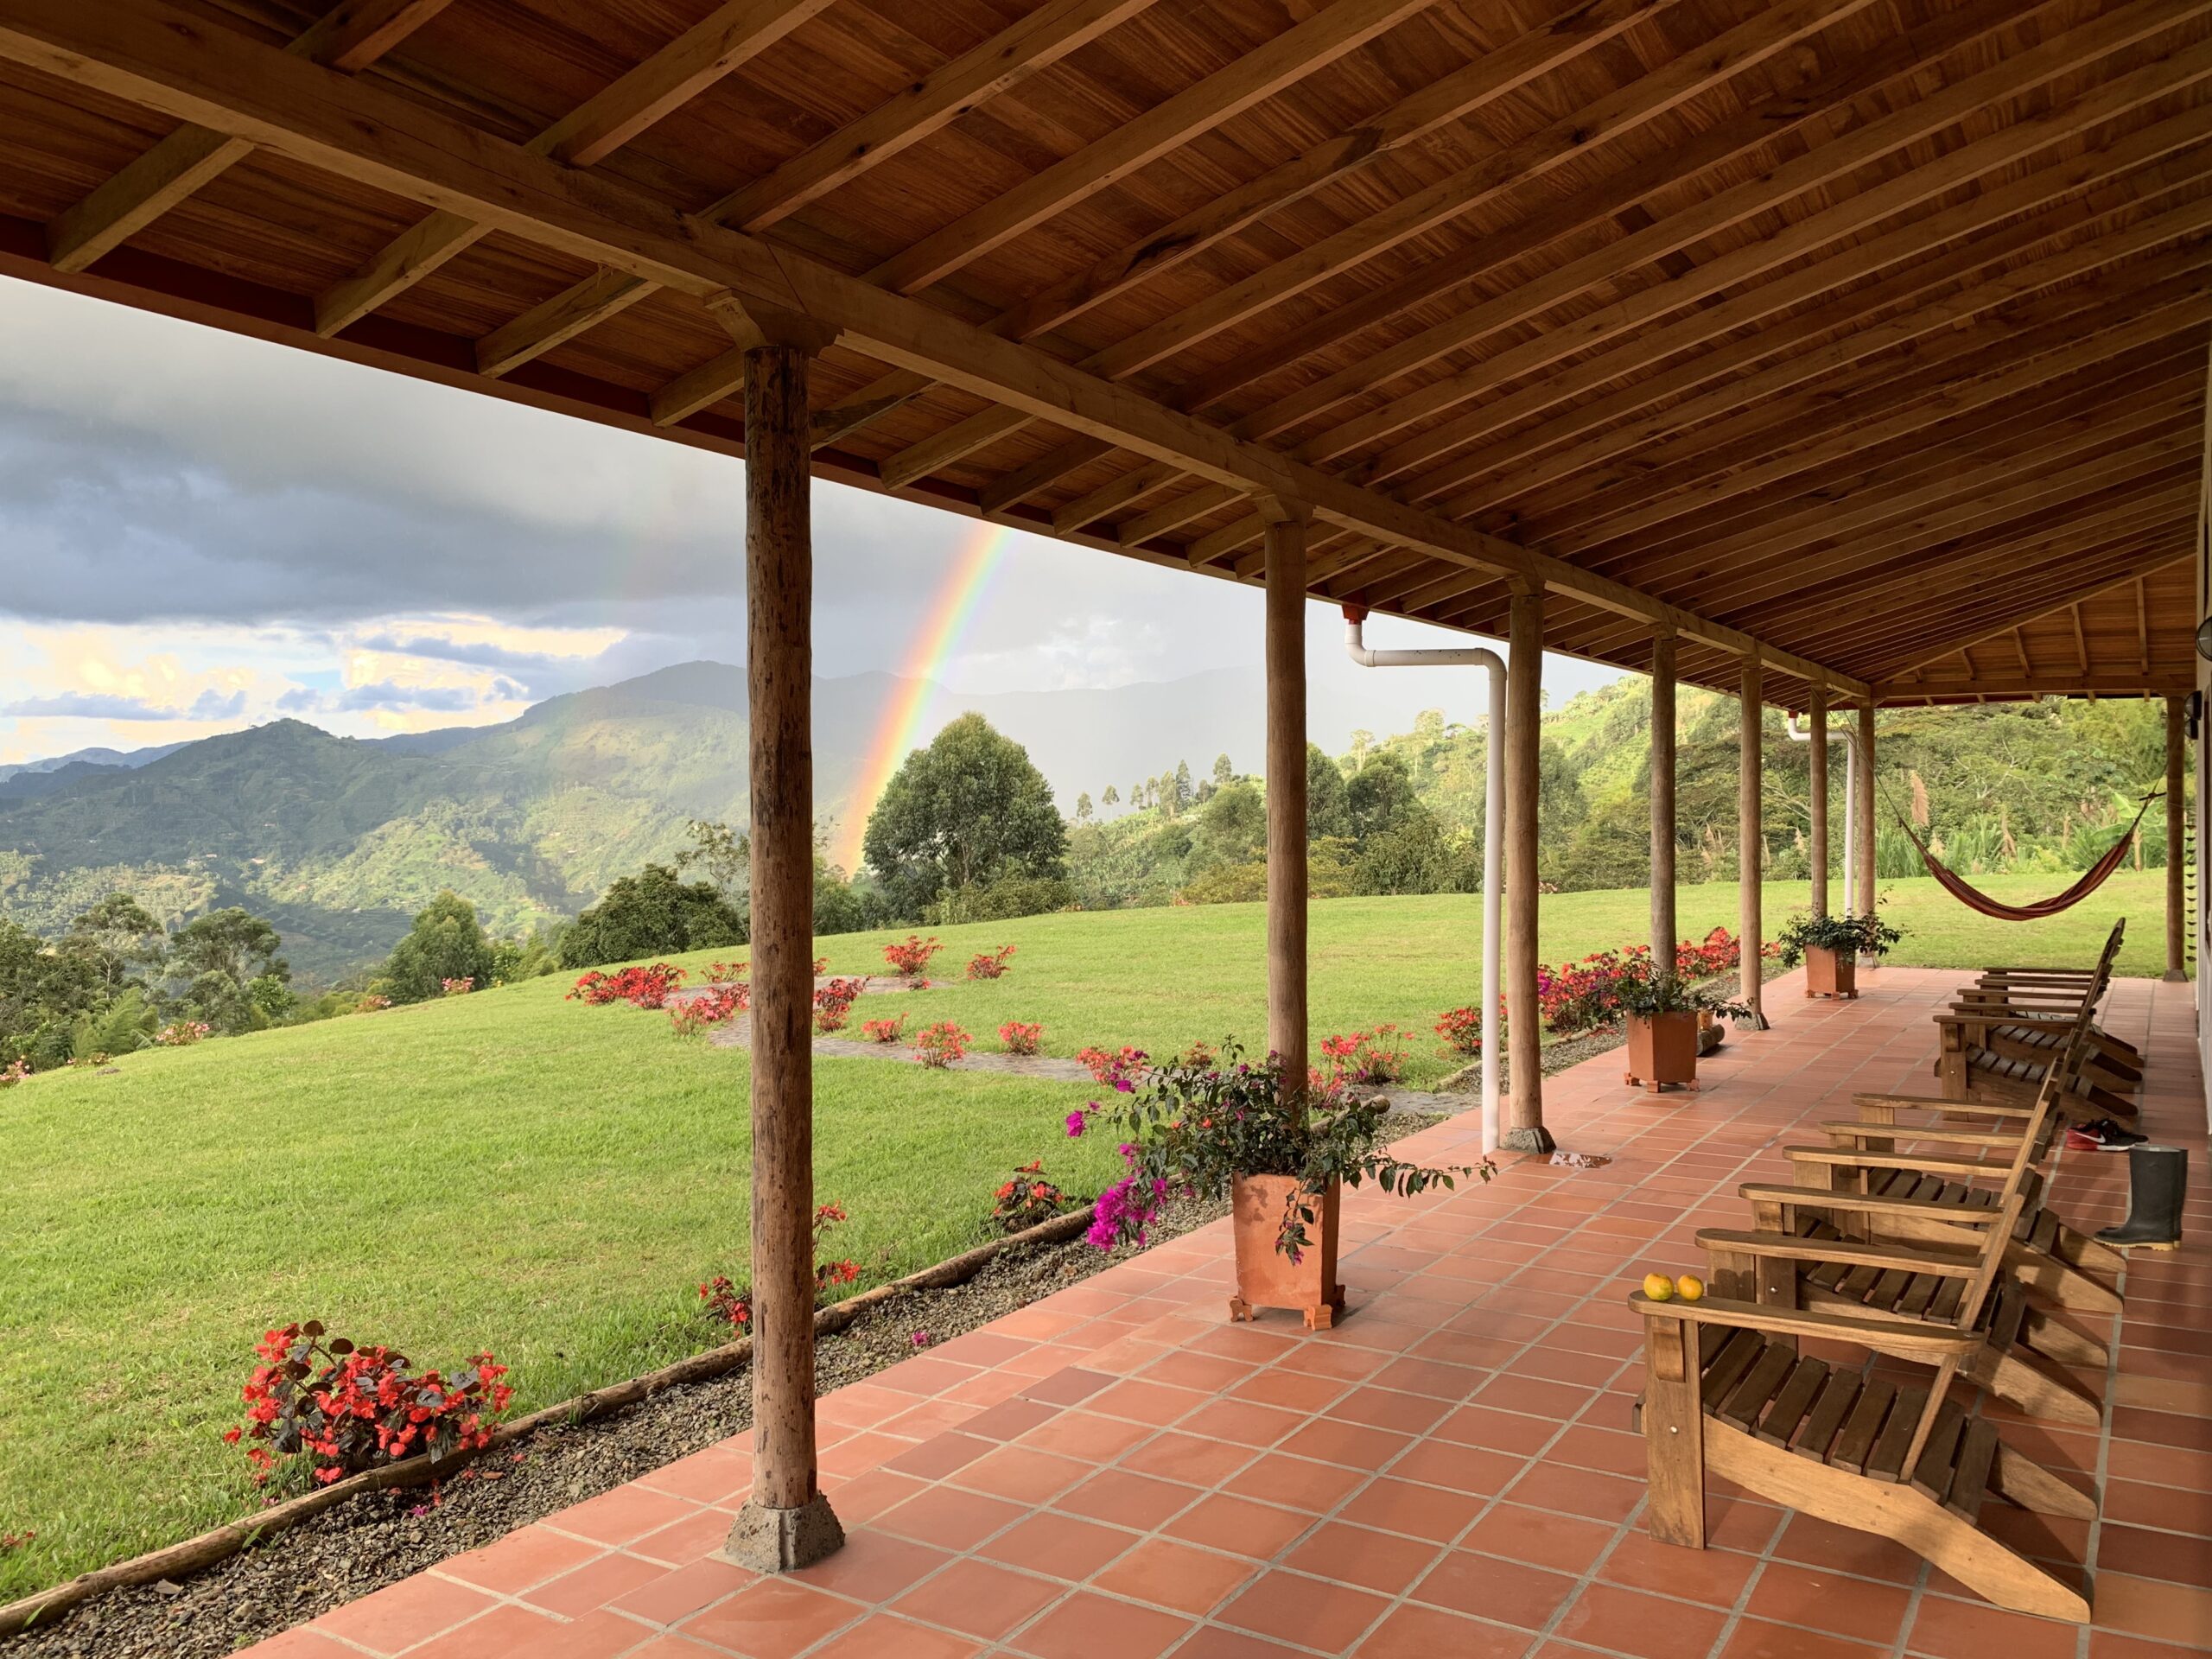 The front patio of Finca Mariposa -A Colombian coffee farm in Jardin Colombia